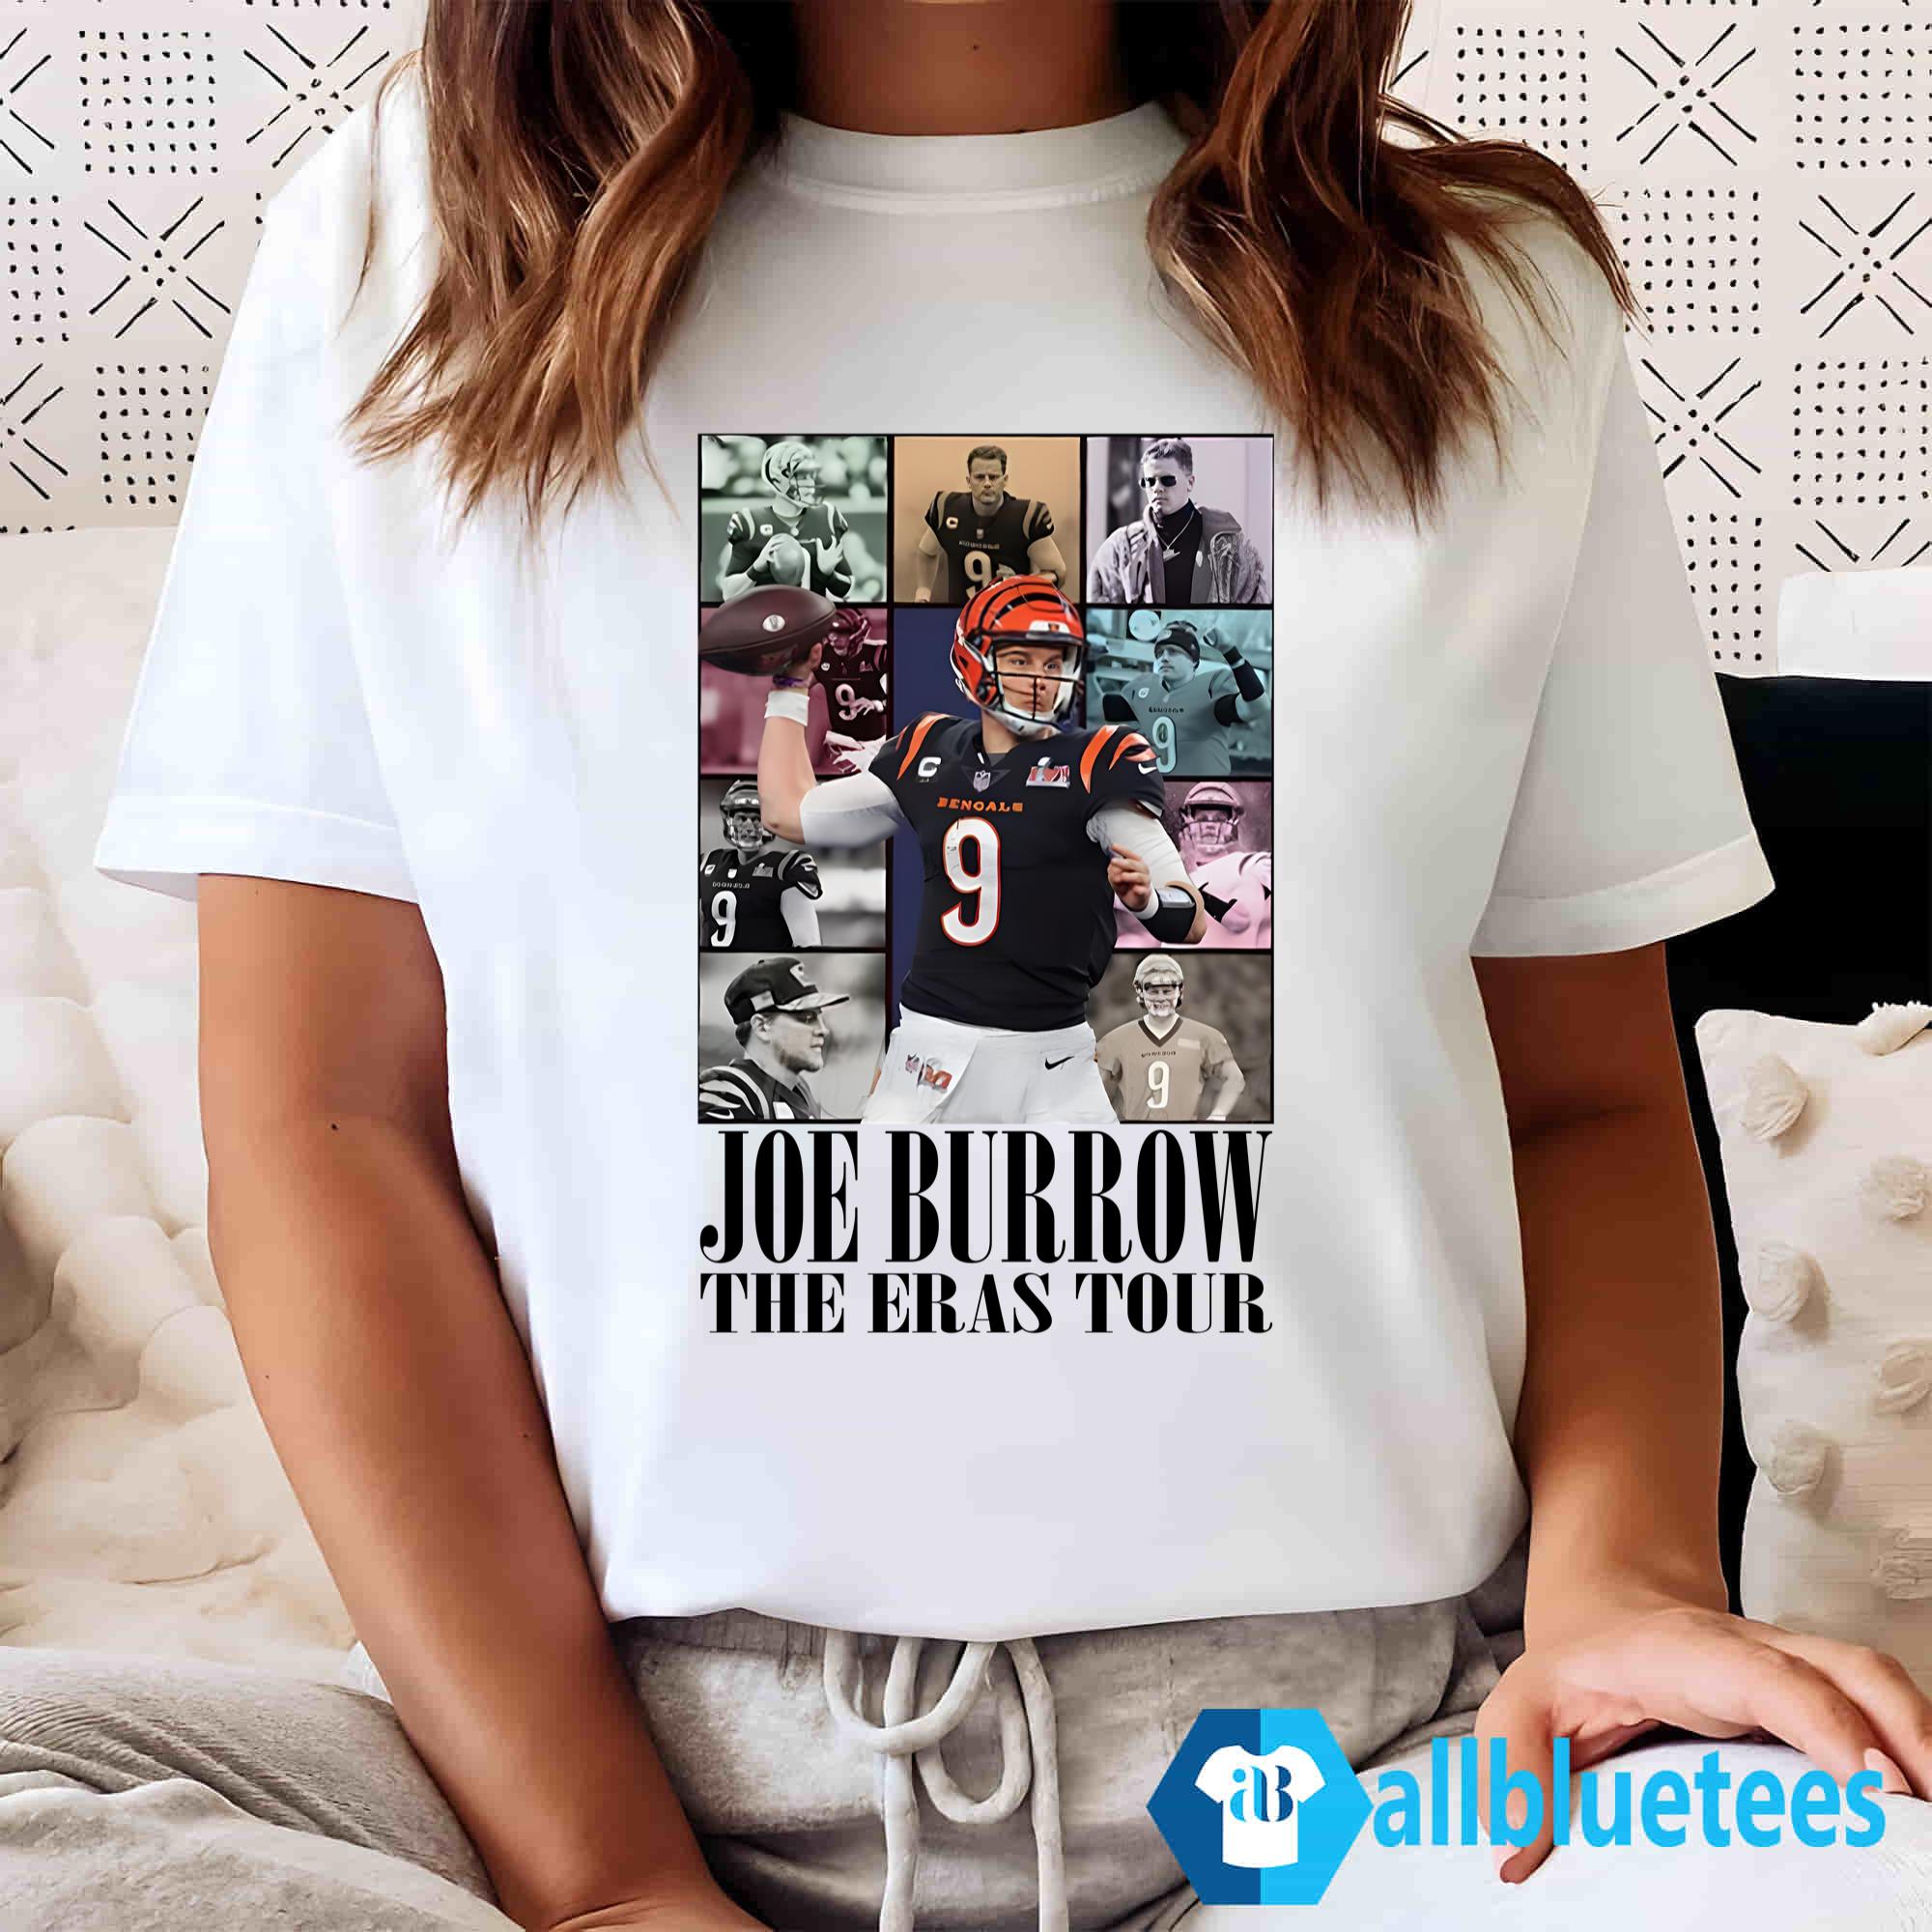 joe burrow womens shirt